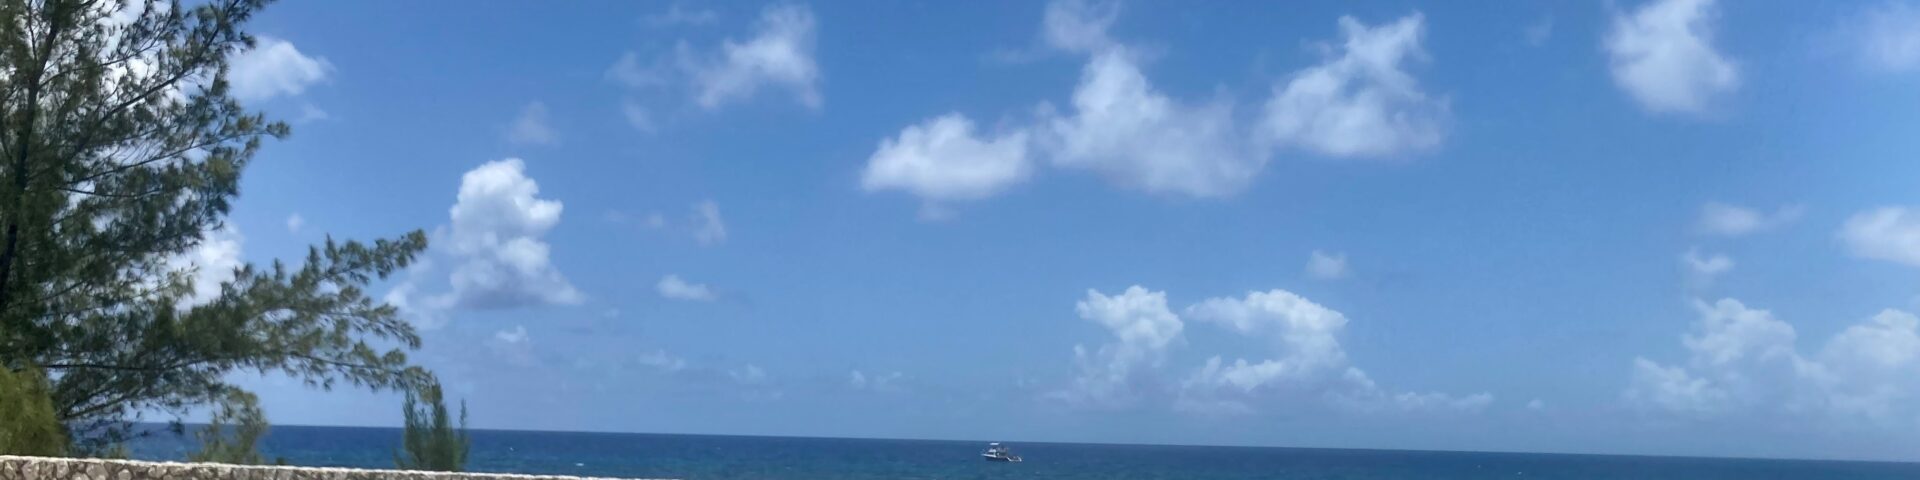 The Caribbean Sea surrounding Grand Cayman Island